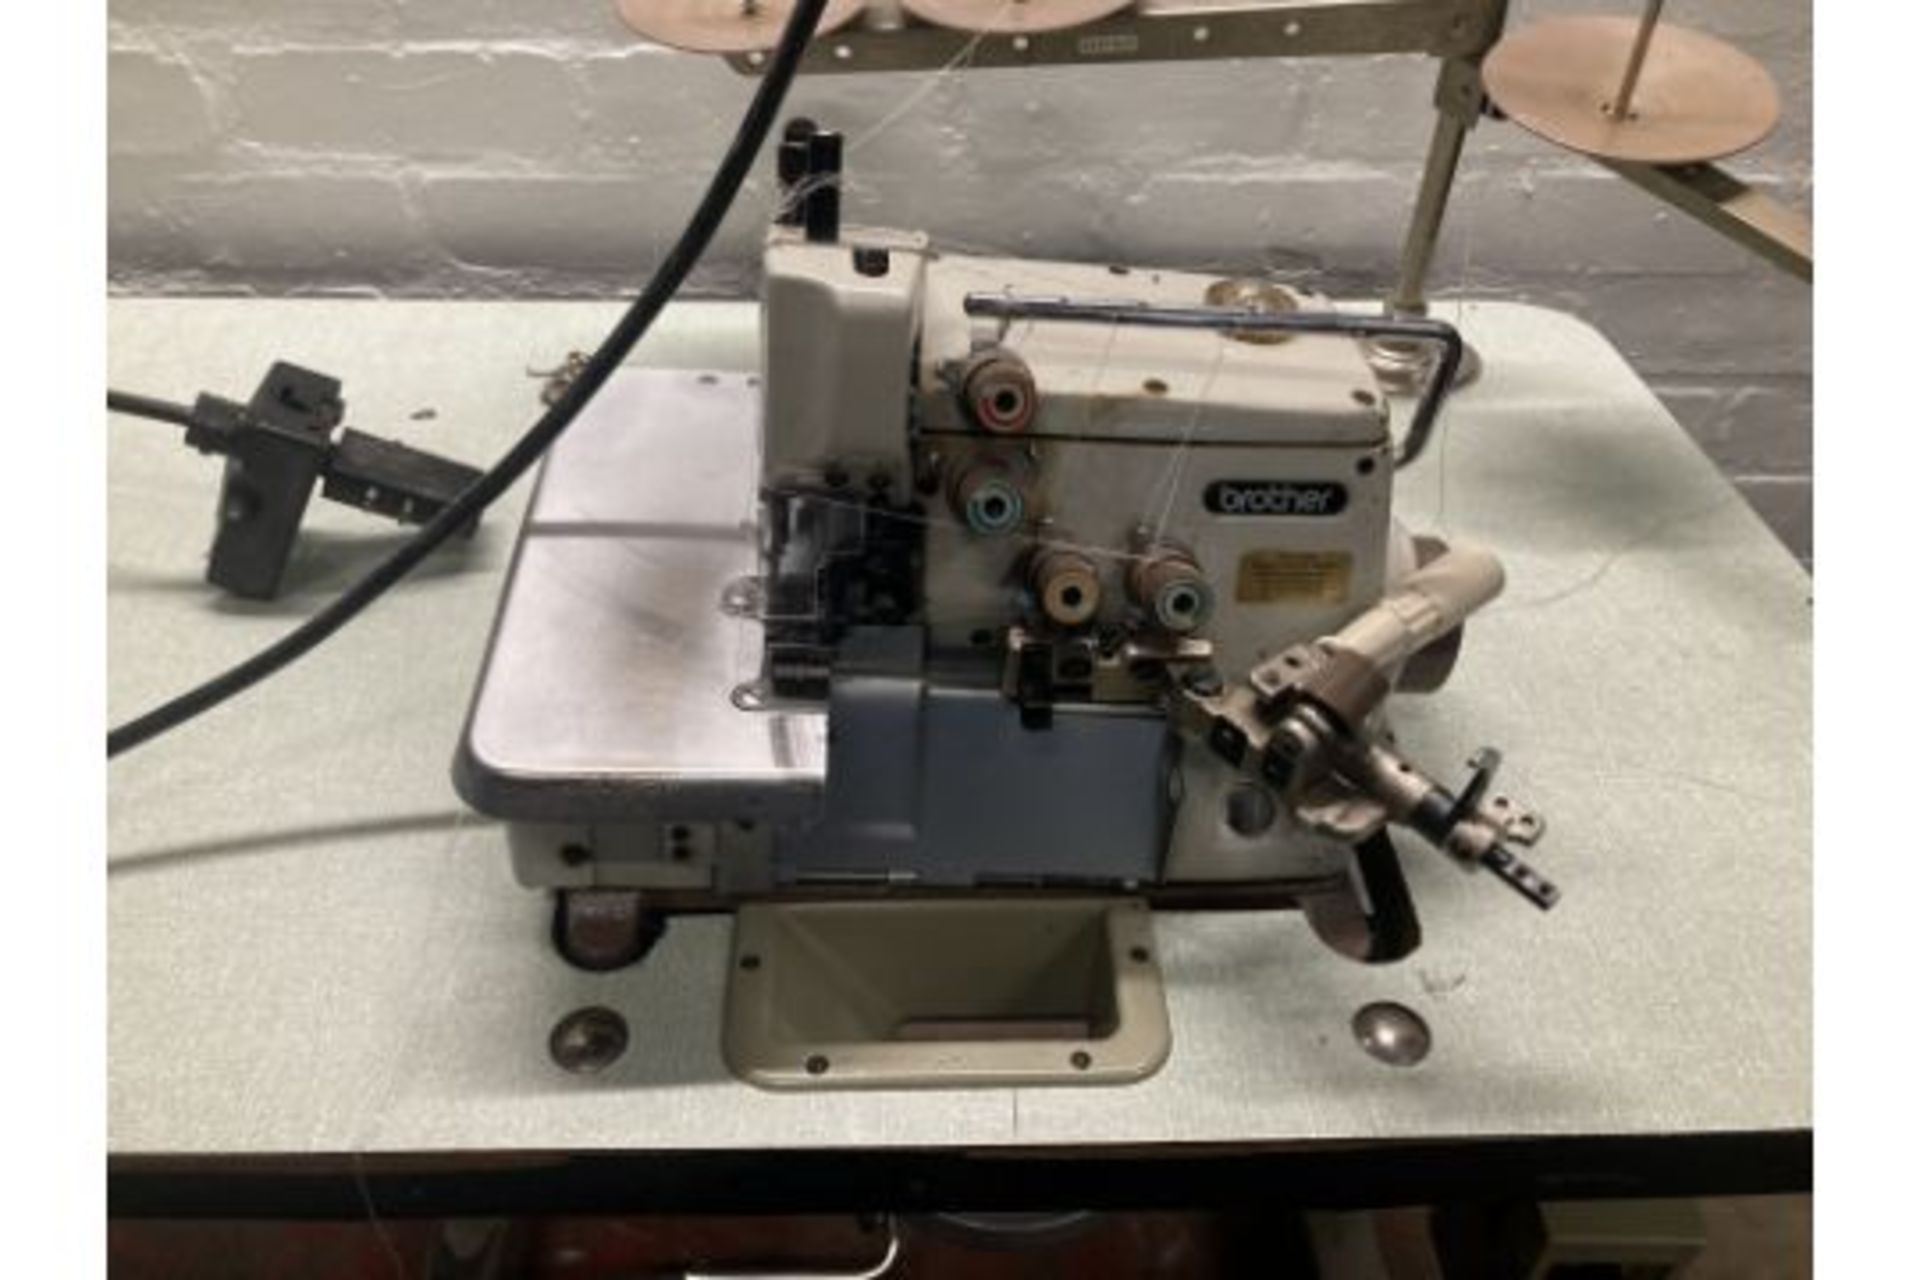 Brother Overlocker MA4-B551 069 S Thread Industrial Overlock Sewing Machine - Image 2 of 5